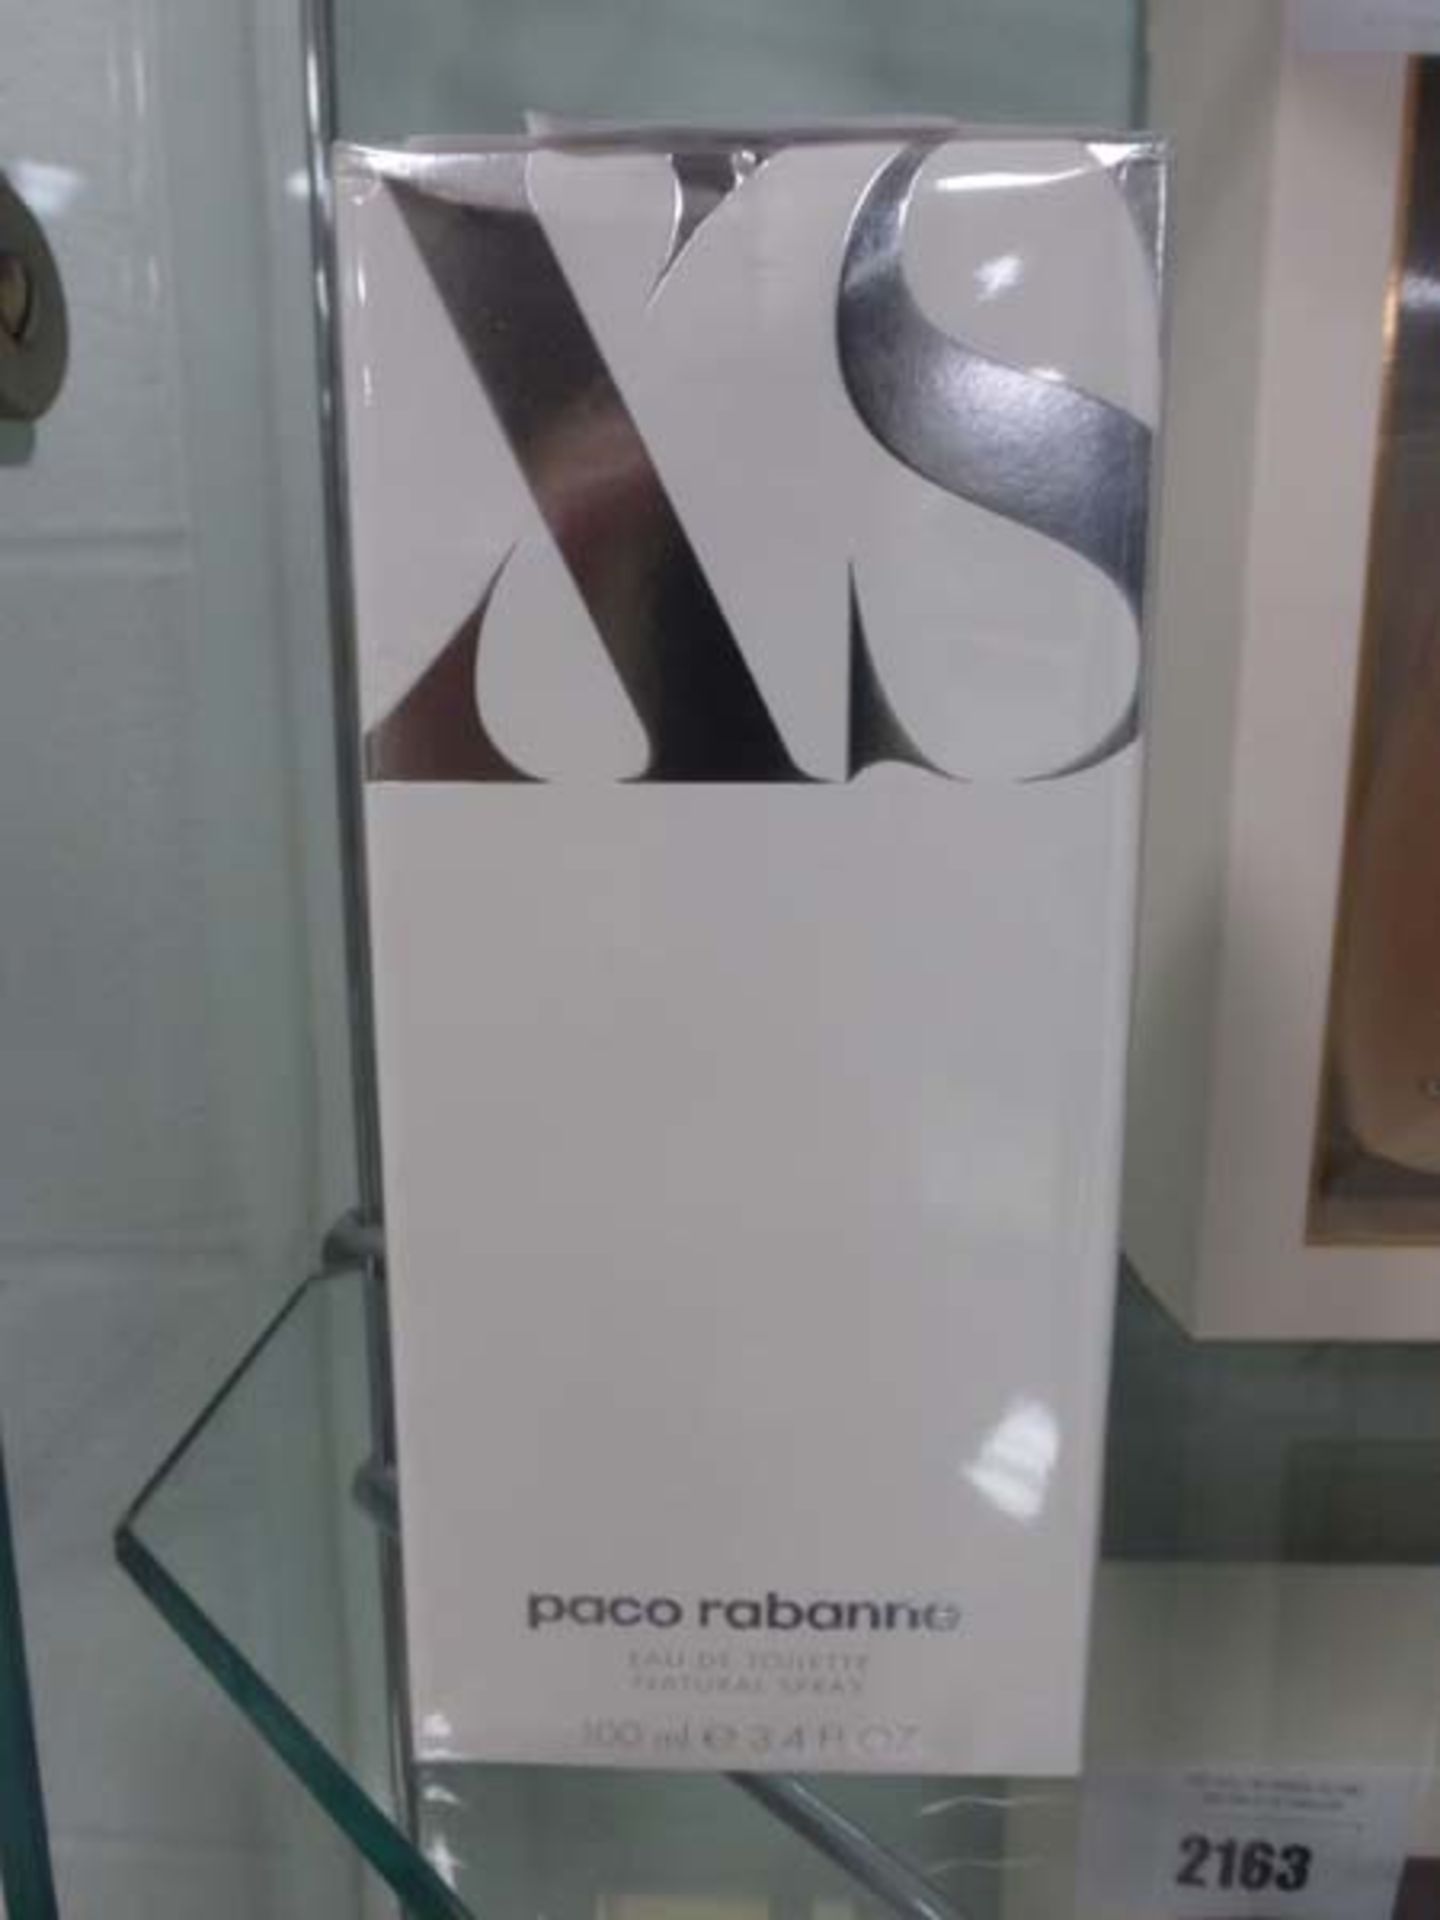 Paco Rabanne Excess 100ml eau de toilette natural spray in sealed box